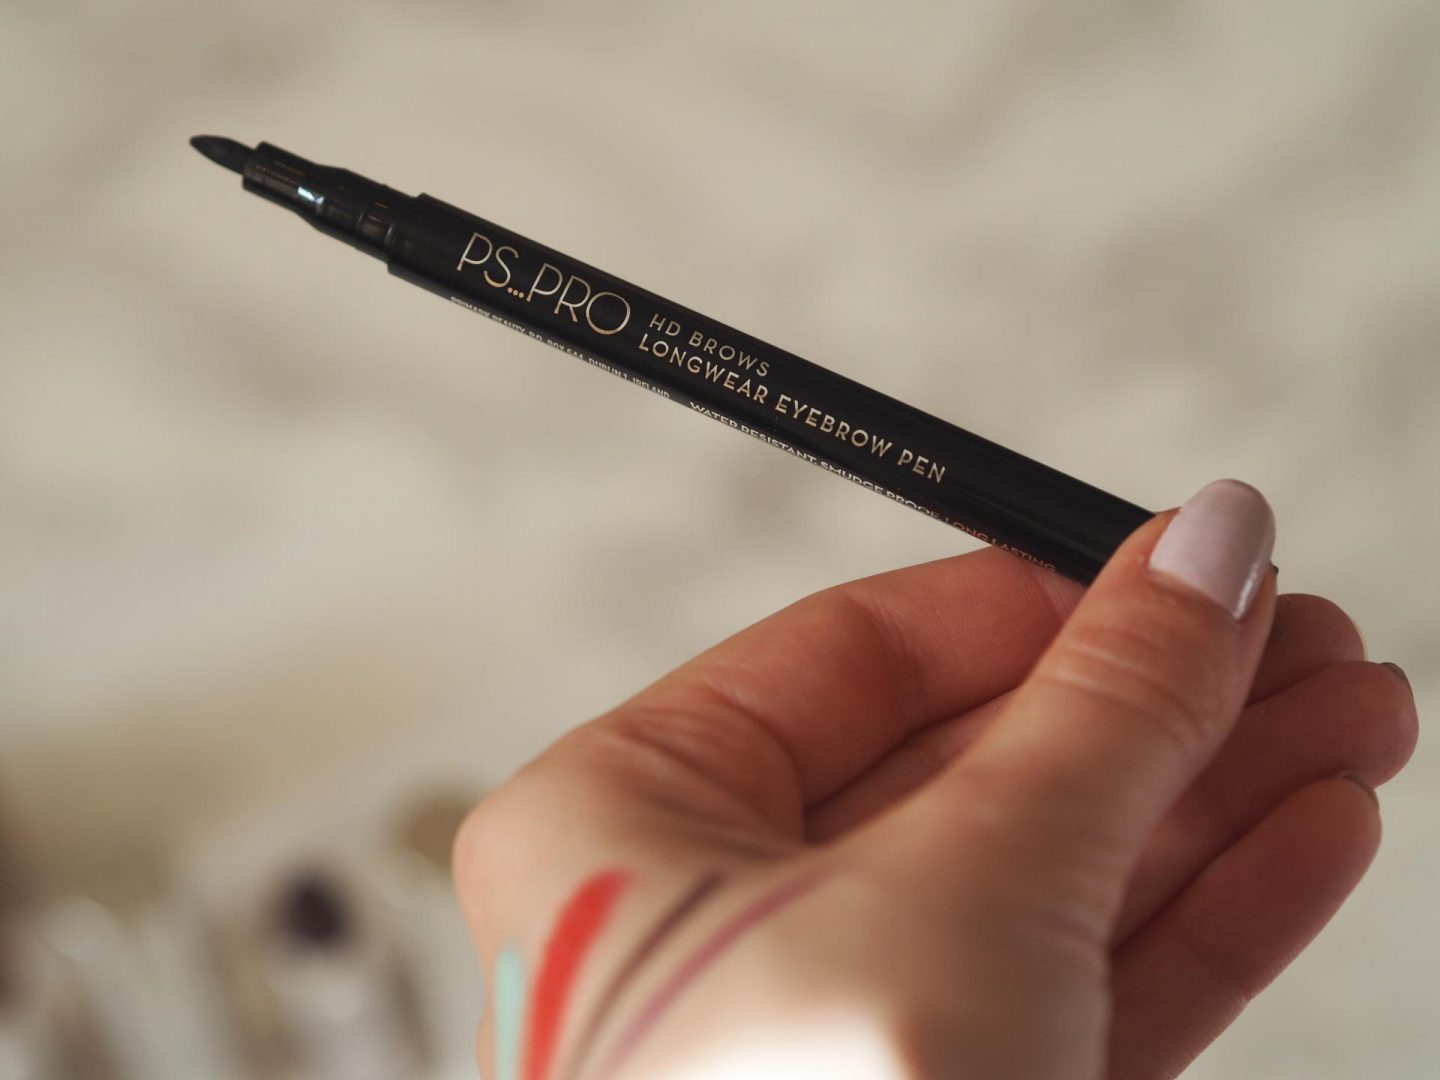 Primark PS Pro - Products: HD Brows Longwear Eyebrow Pen